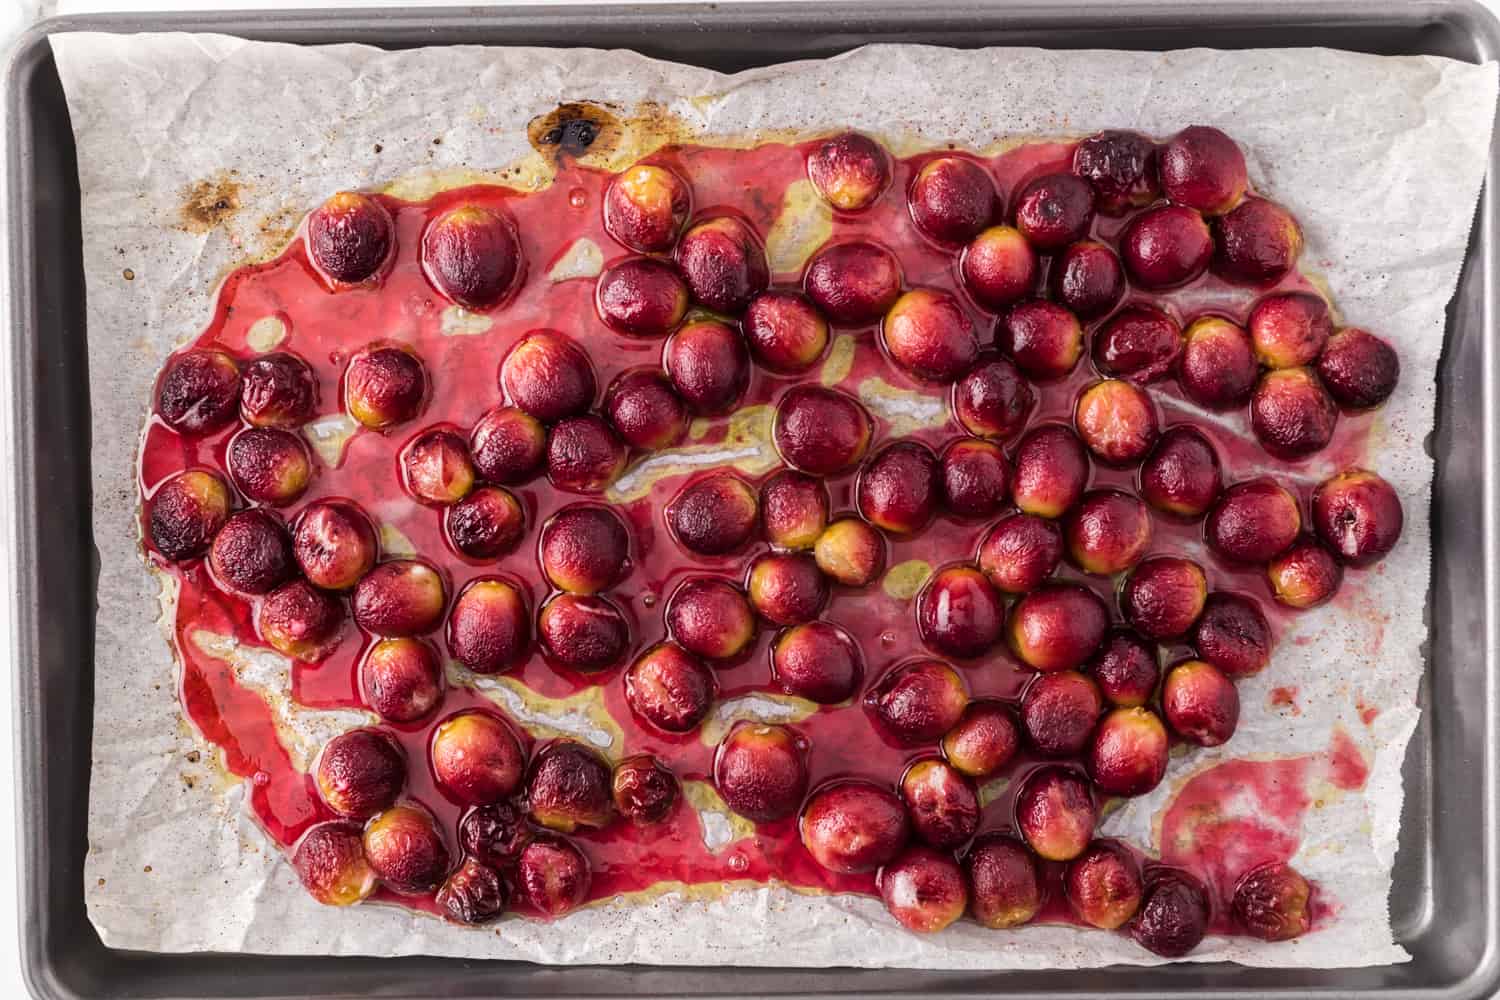 Roasted grapes on sheet pan.